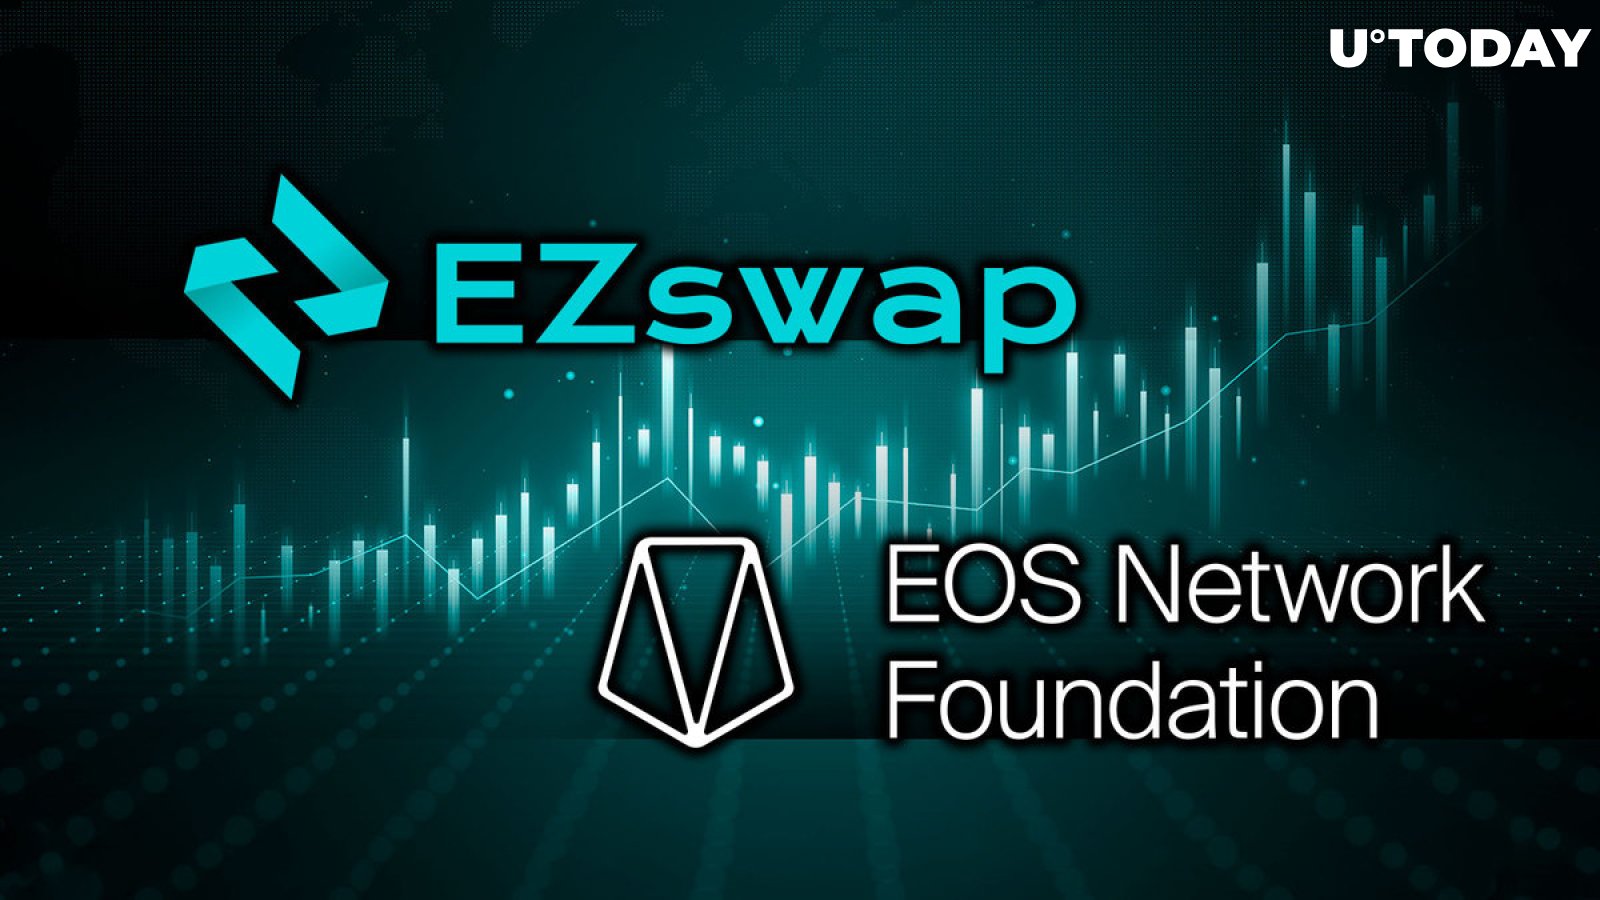 EOS Network Ventures Boosts EZ Swap With $500,000 Investment